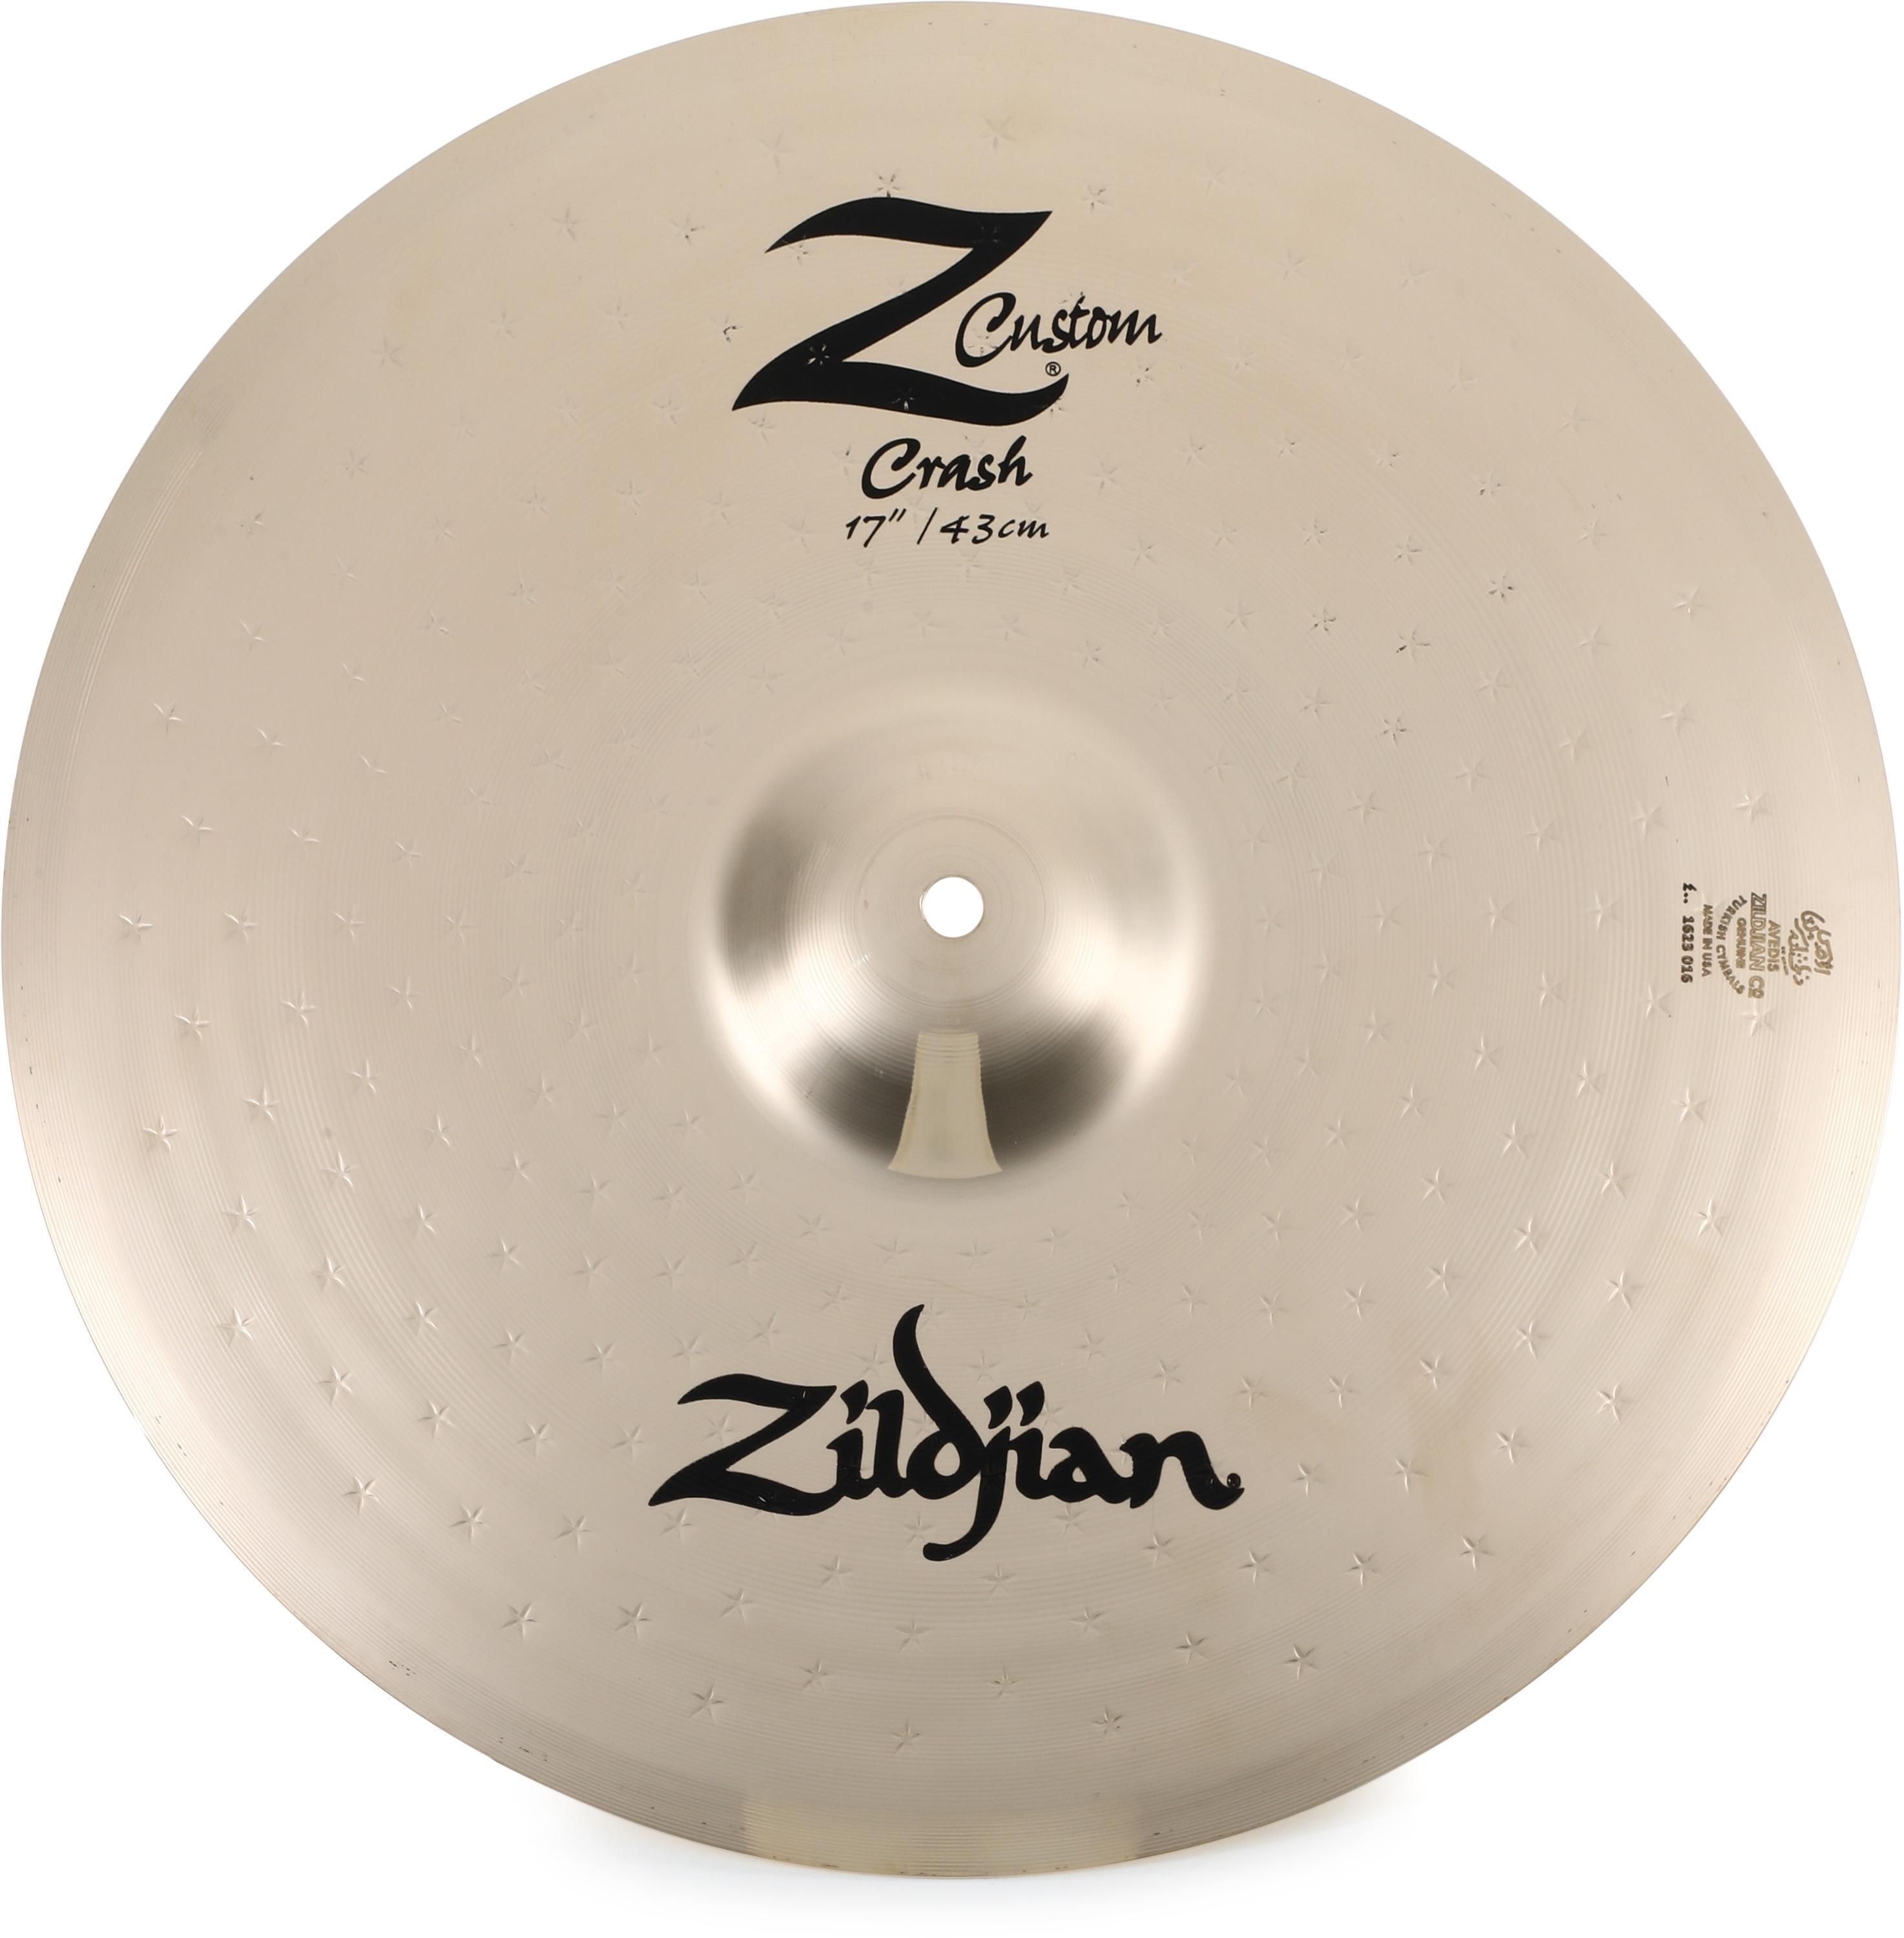 Zildjian Z Custom Crash Cymbal - 17 inch | Sweetwater